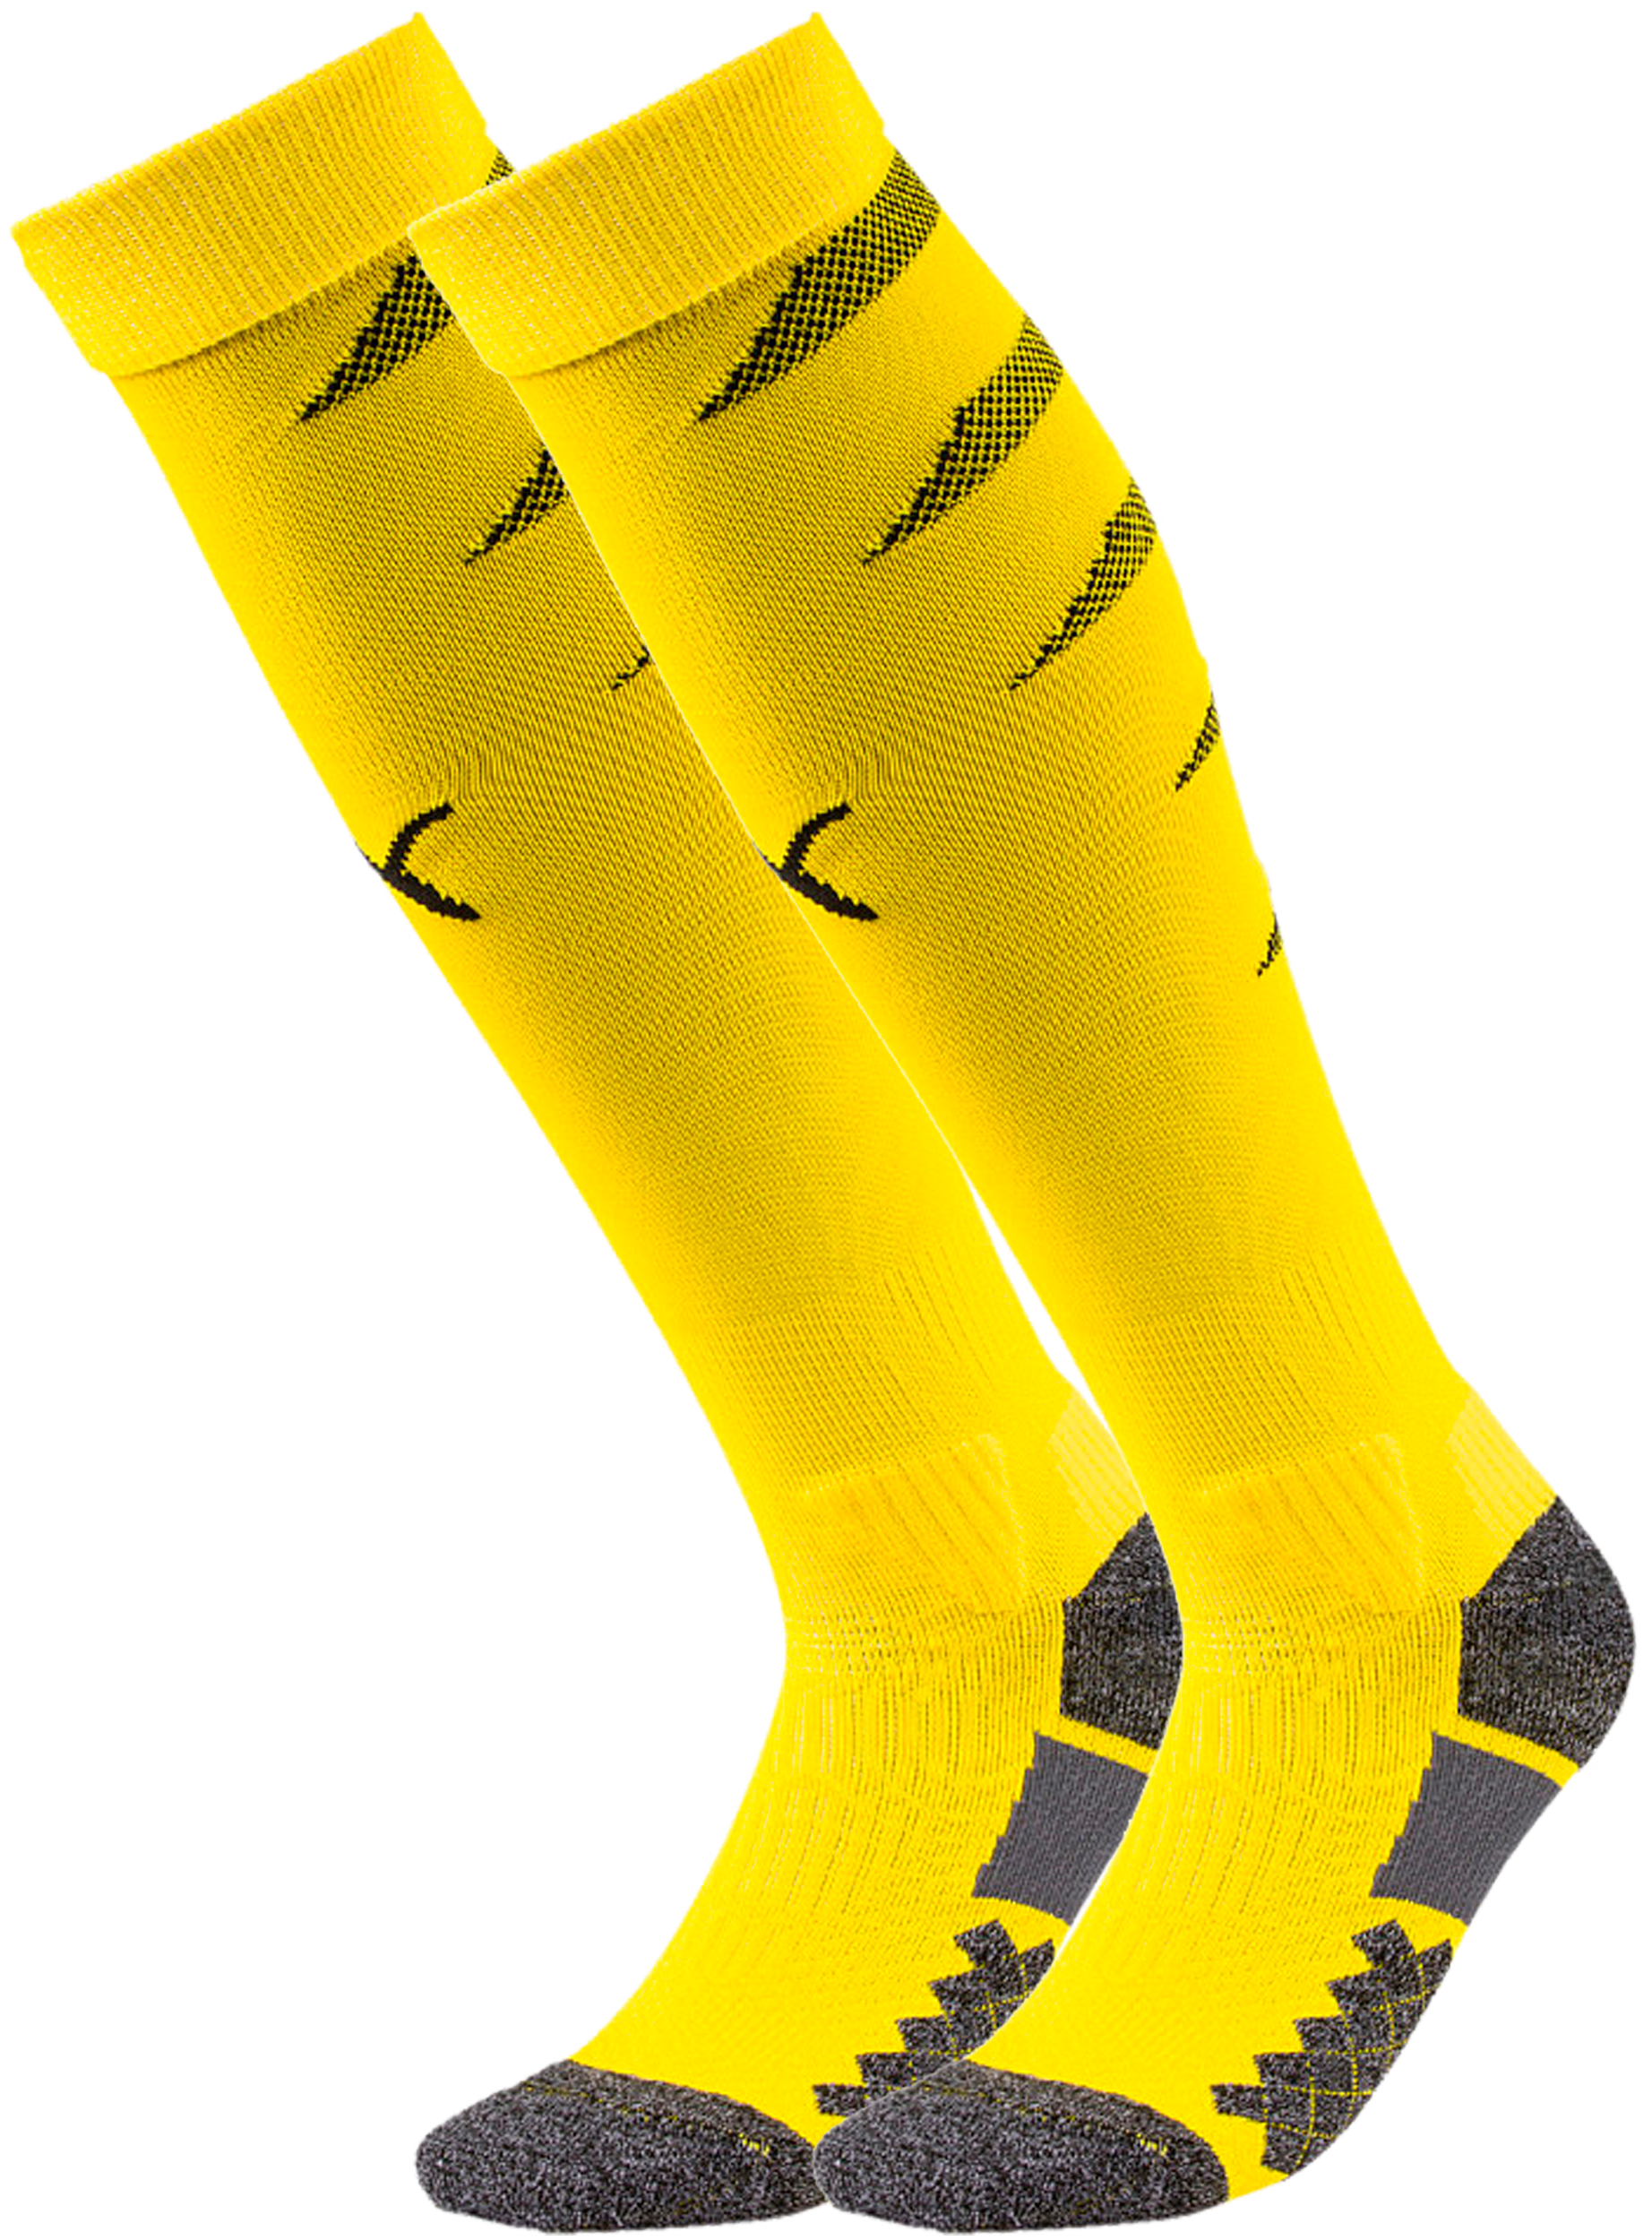 puma transparent socks